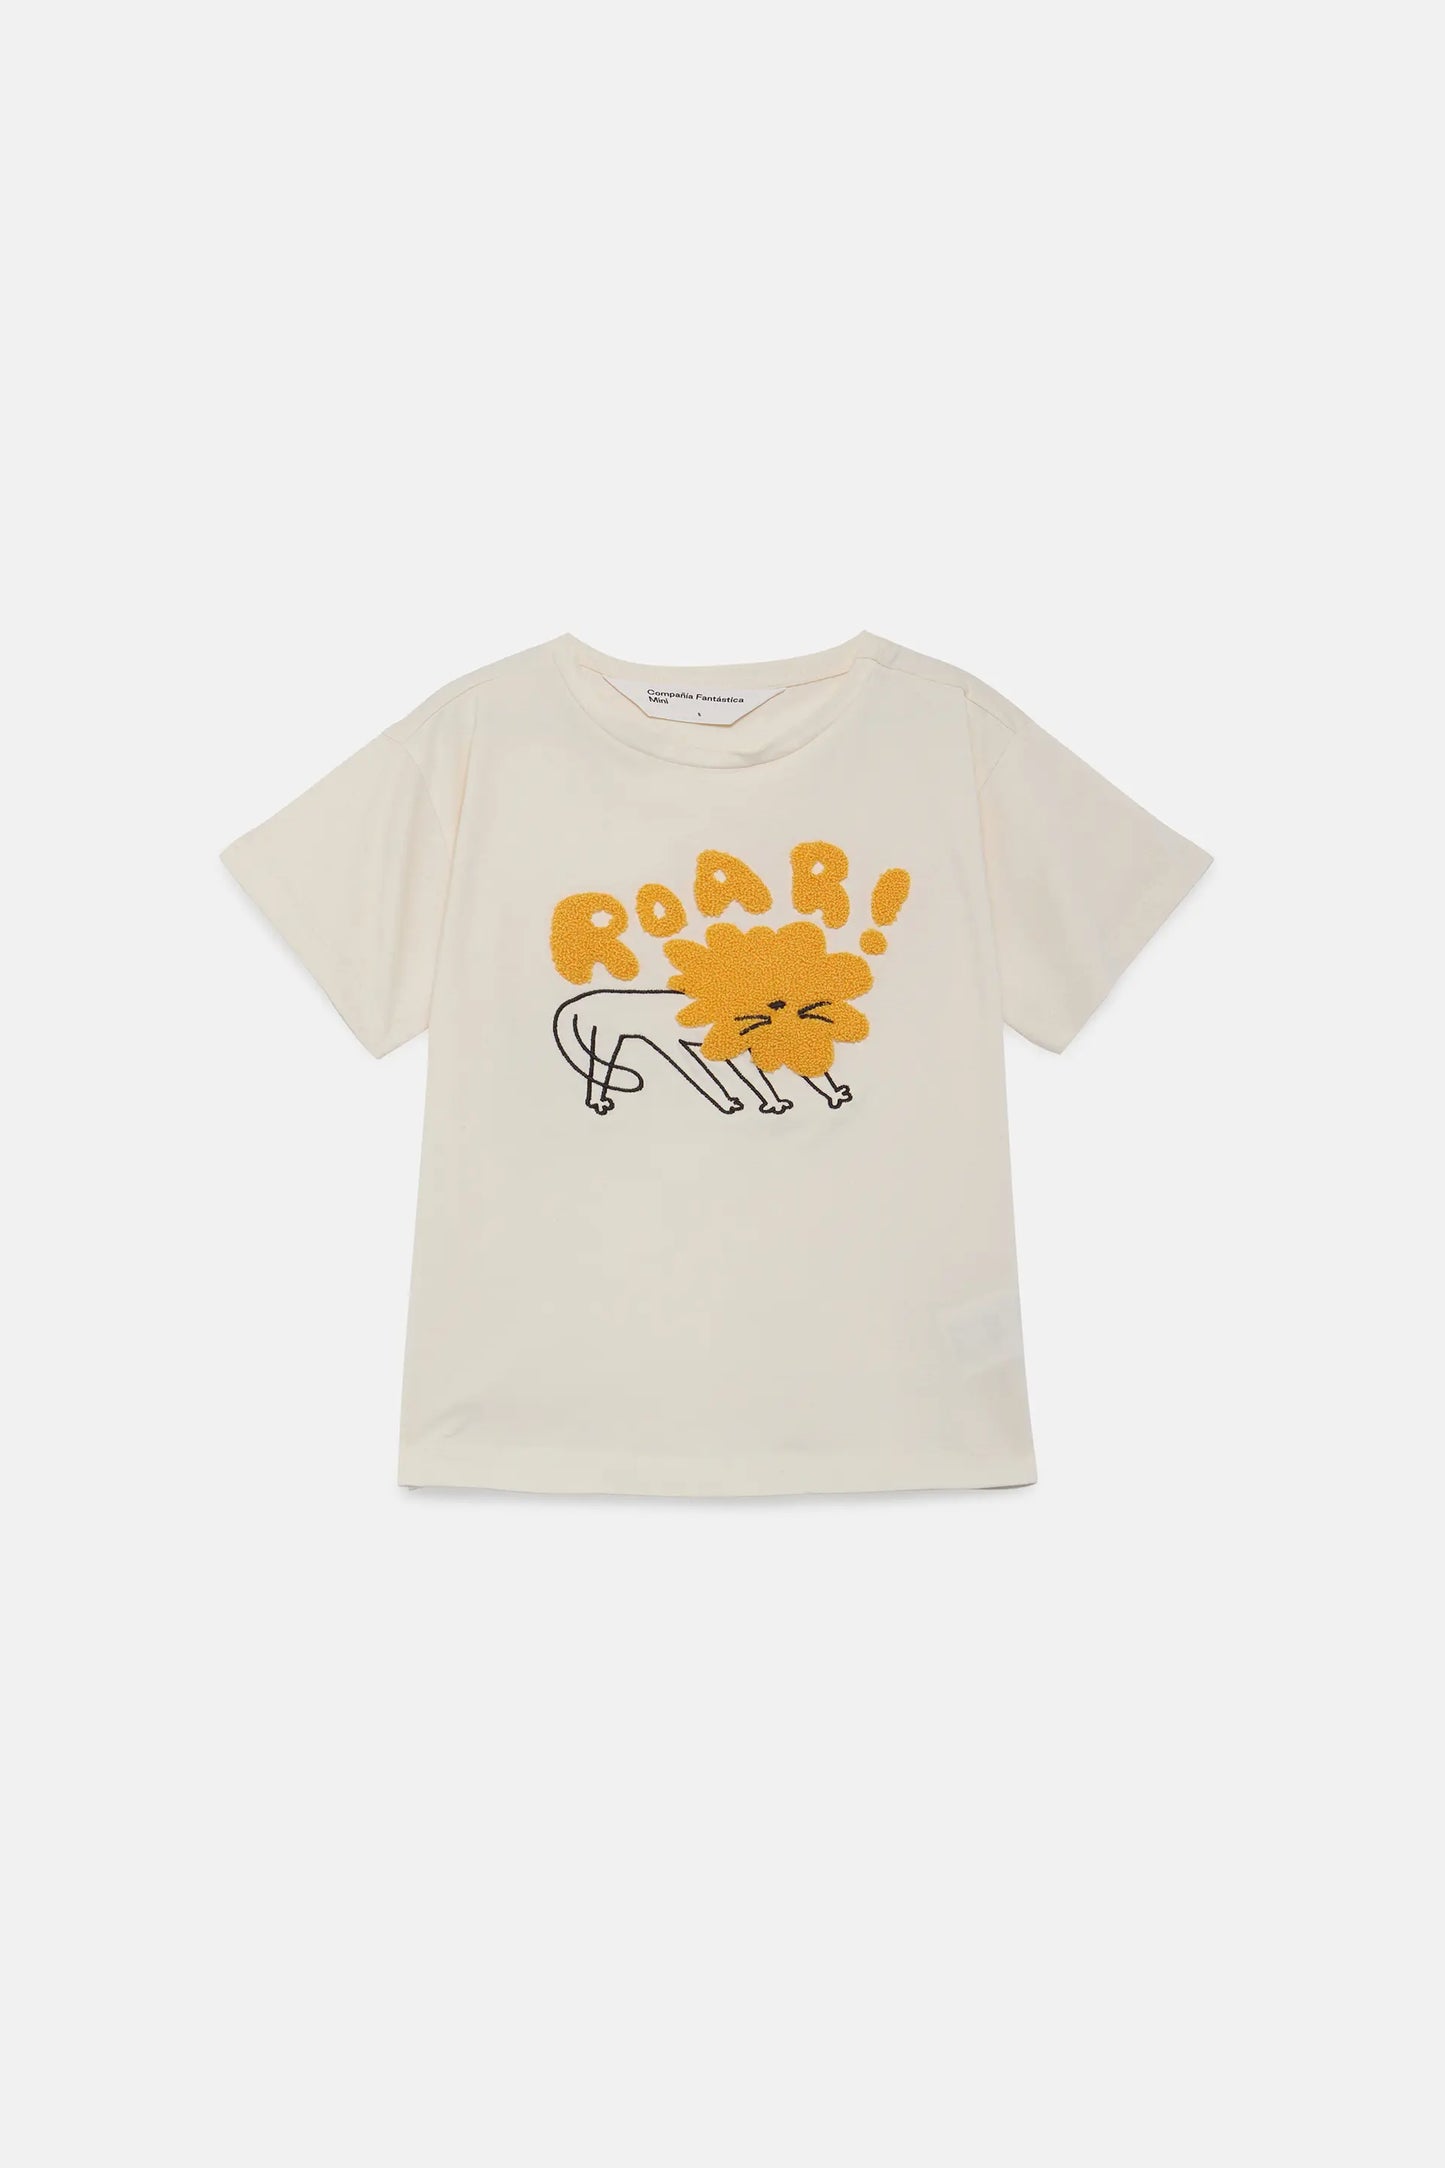 Camiseta unisex animal print blanca